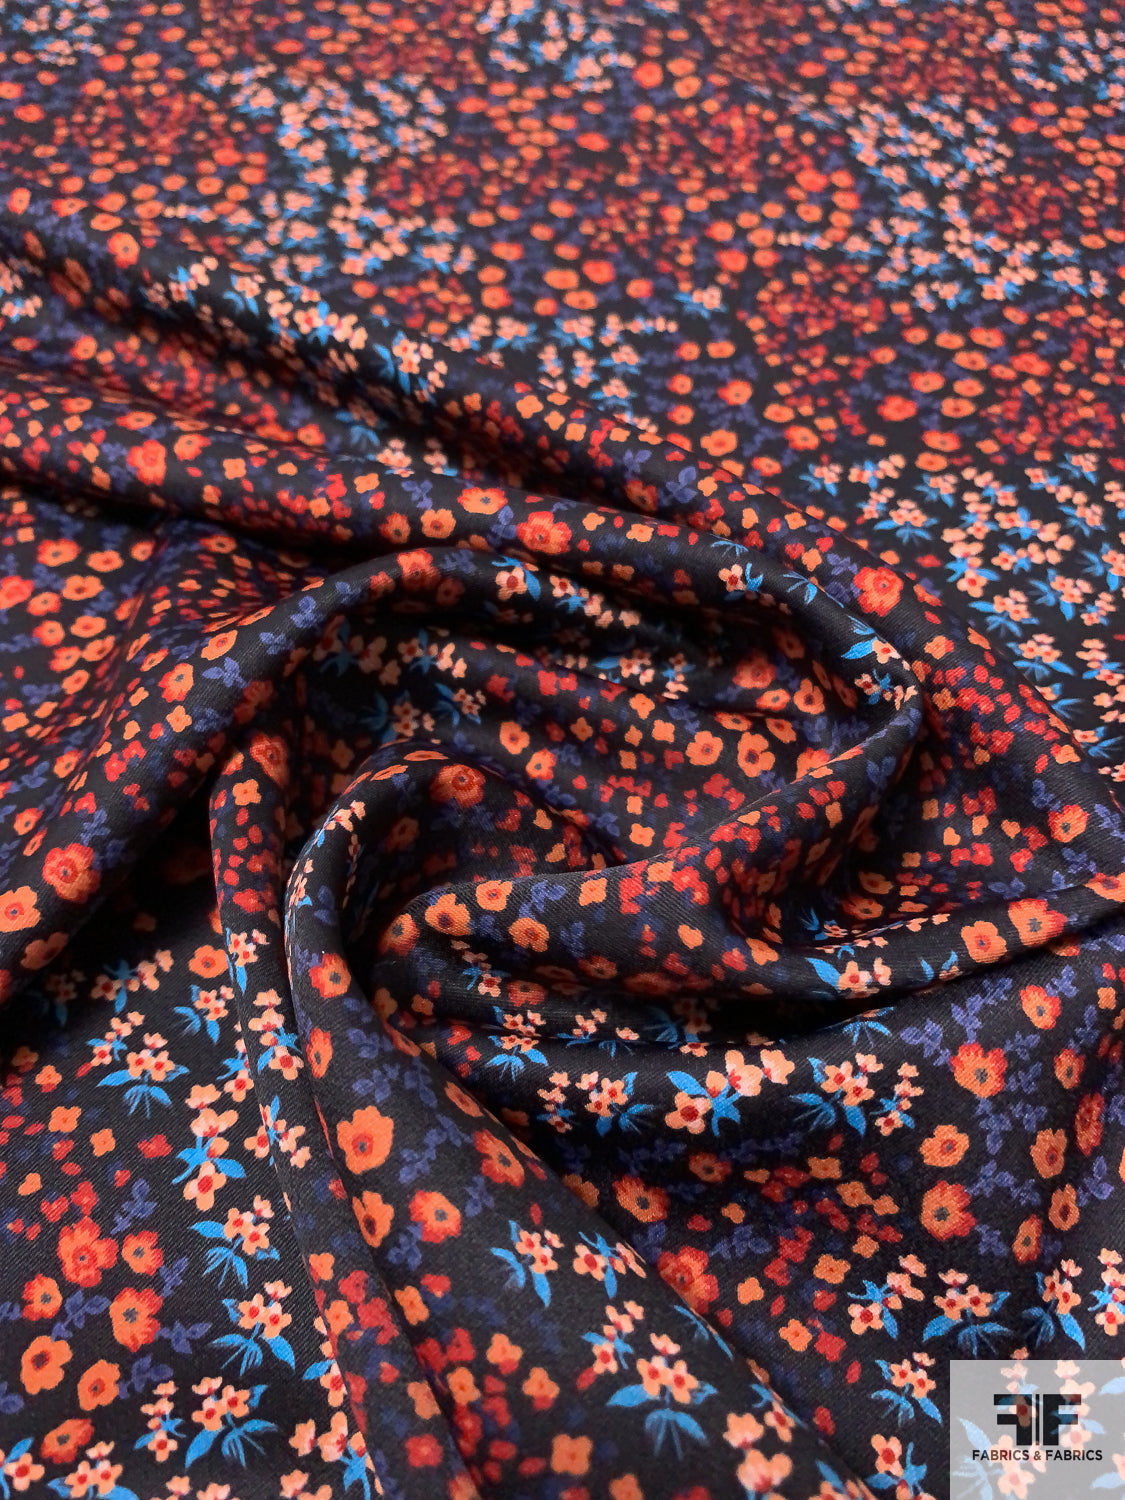 Ditsy Floral Printed Low-Sheen Polyester Charmeuse - Orange / Burnt Orange / Blues / Black